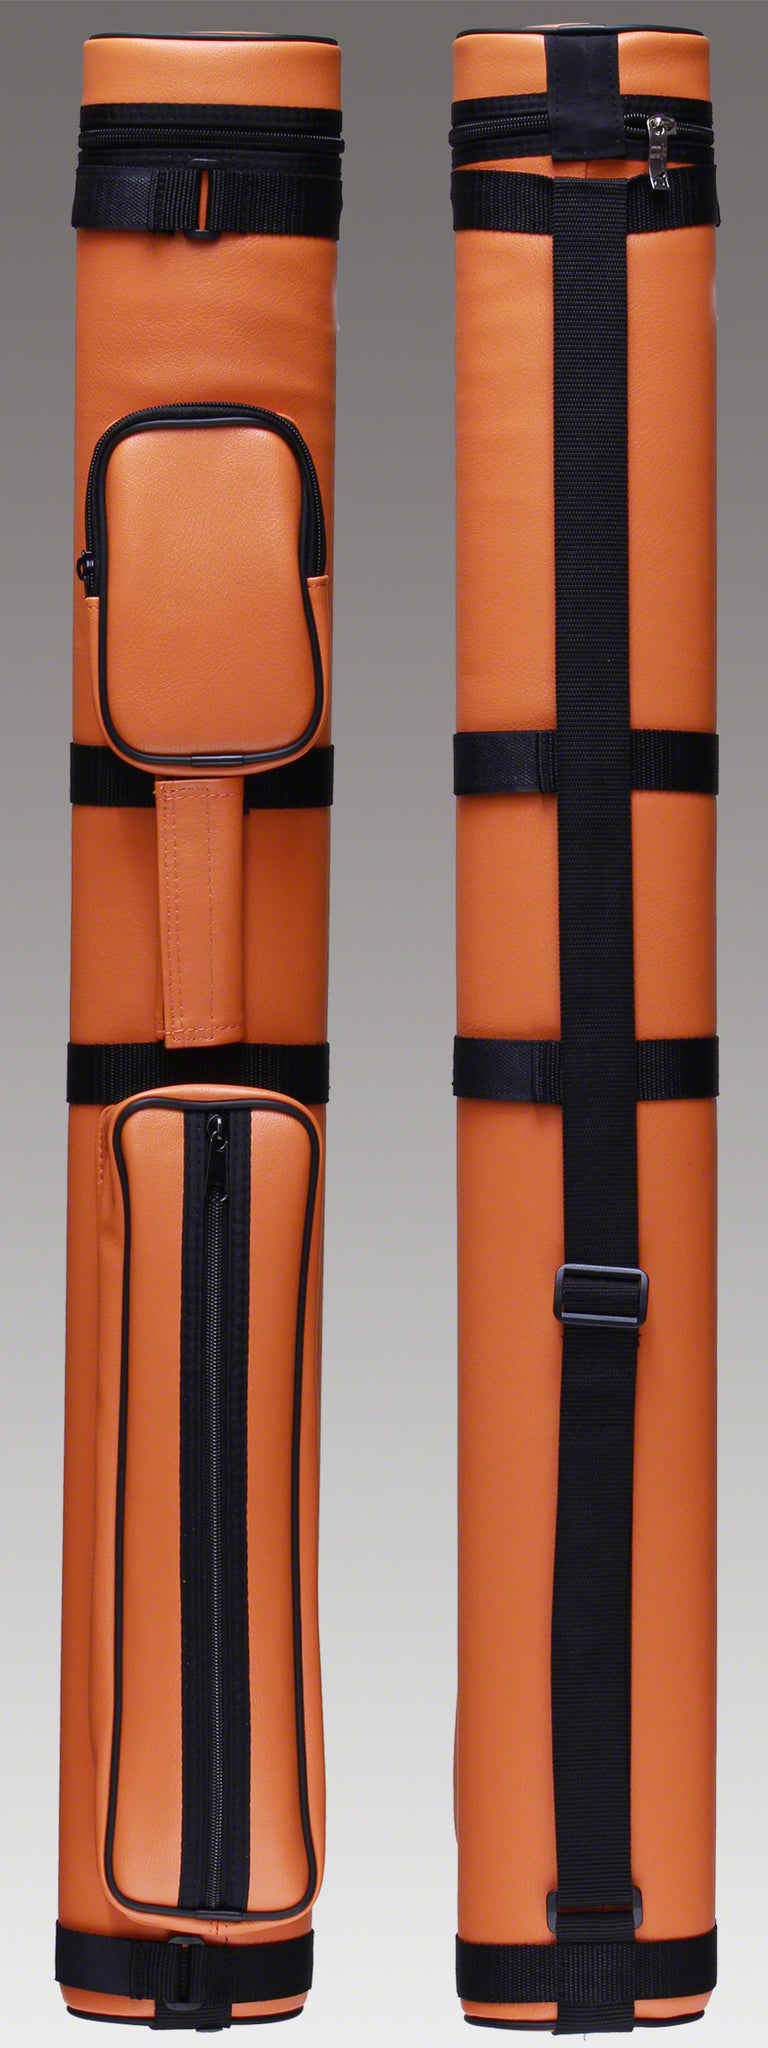 Pro Series Traditional Orange 2x2 Pool Cue Case